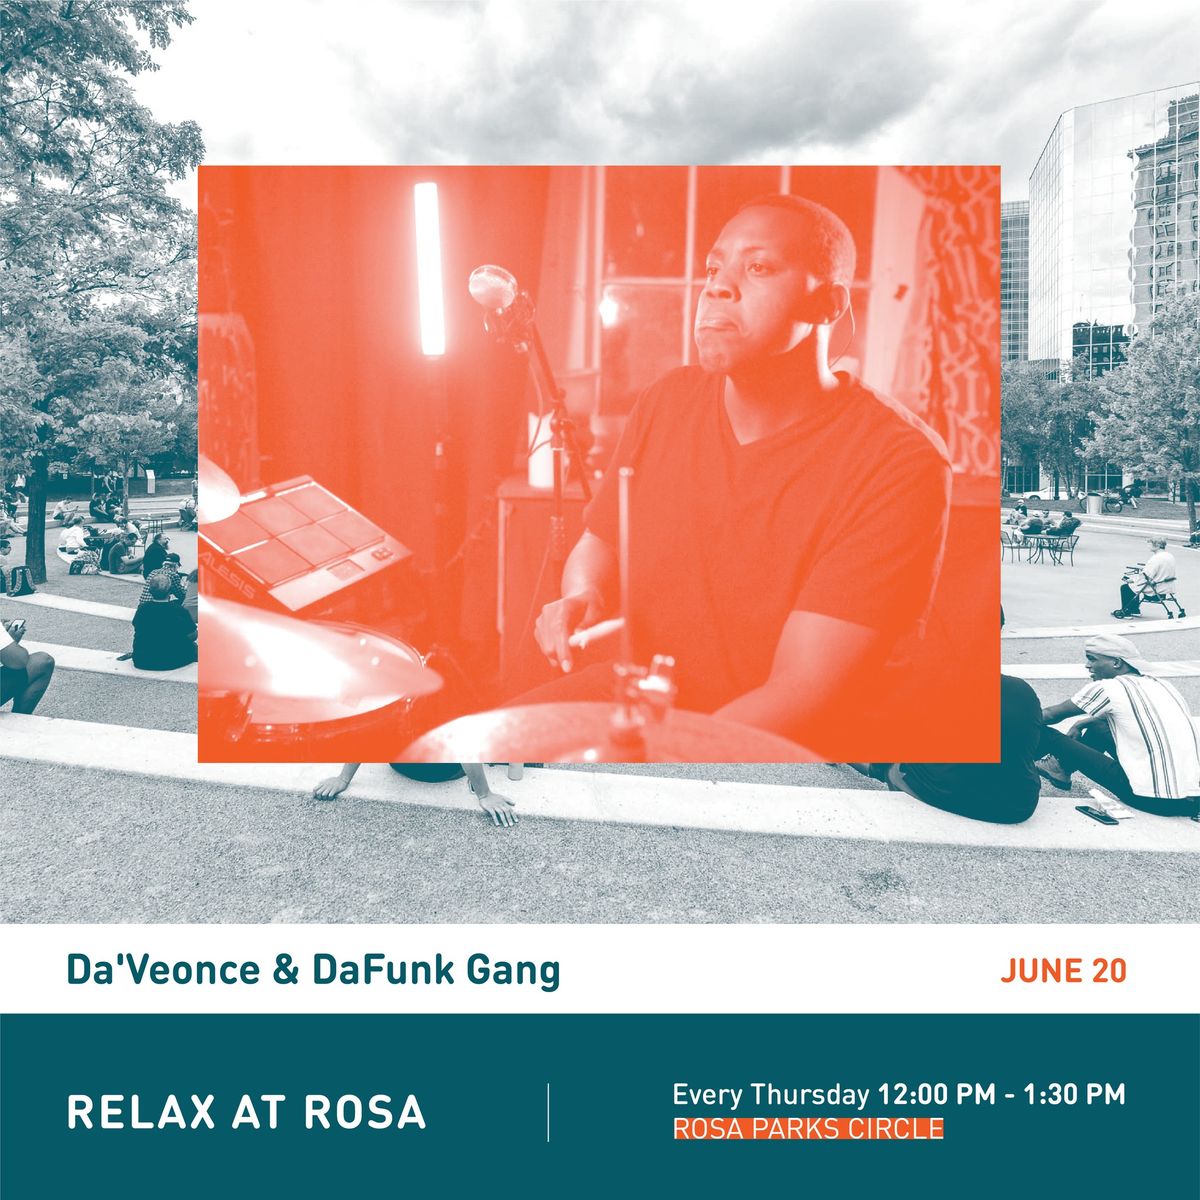 Relax at Rosa Concert Series | Da'Veonce & DaFunk Gang